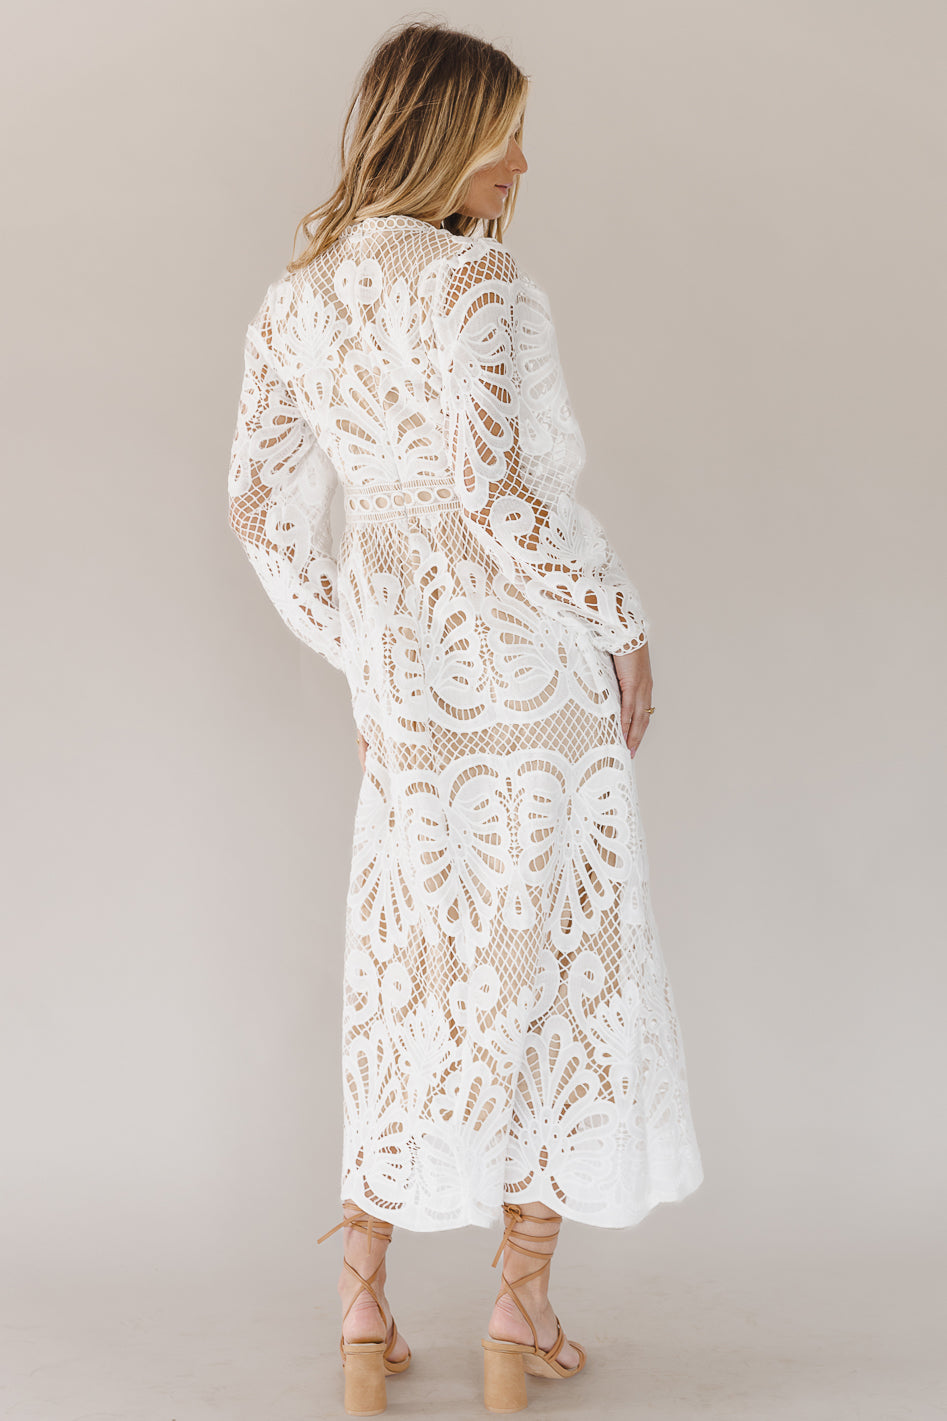 Geraldene Lace Dress in White - FINAL SALE